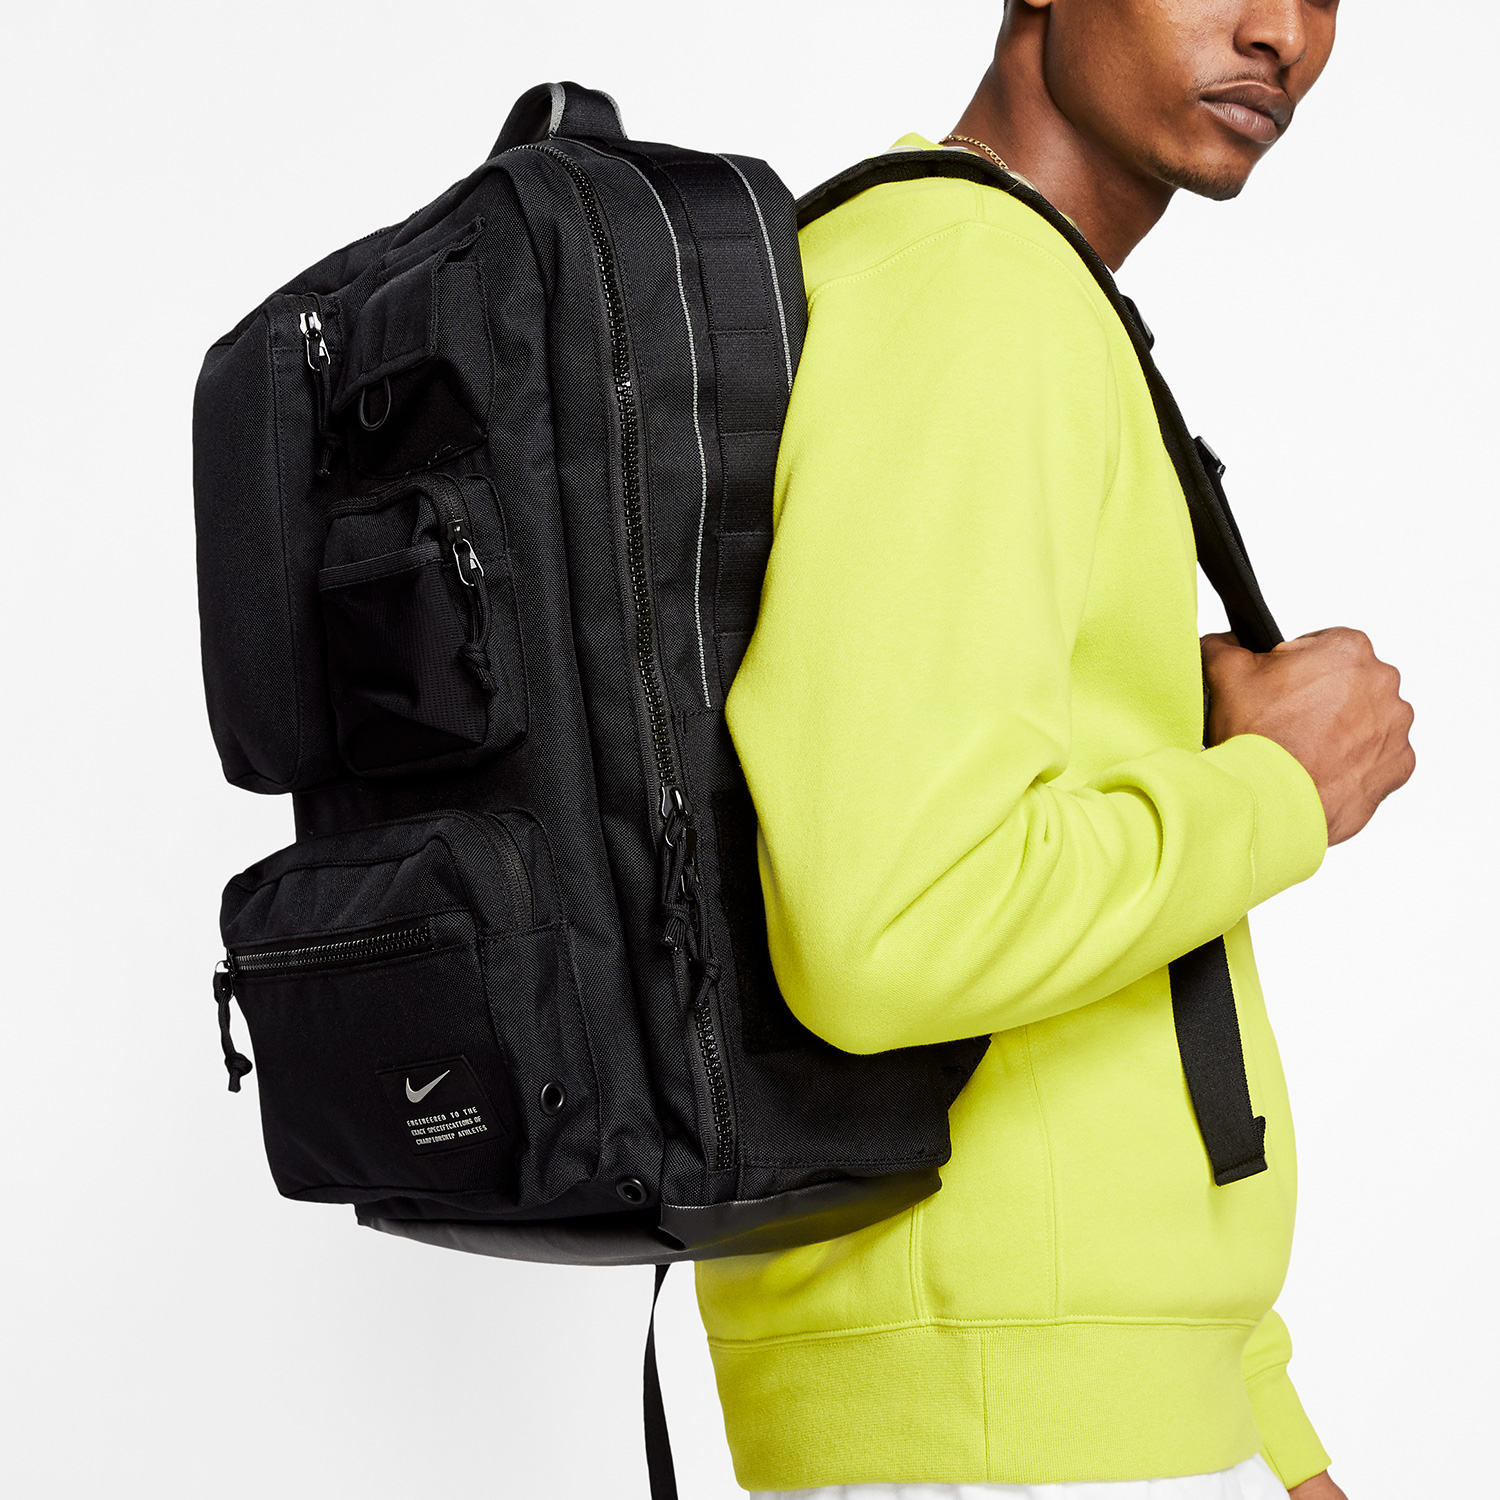 Nike Utility Elite Backpack - Black/Enigma Stone